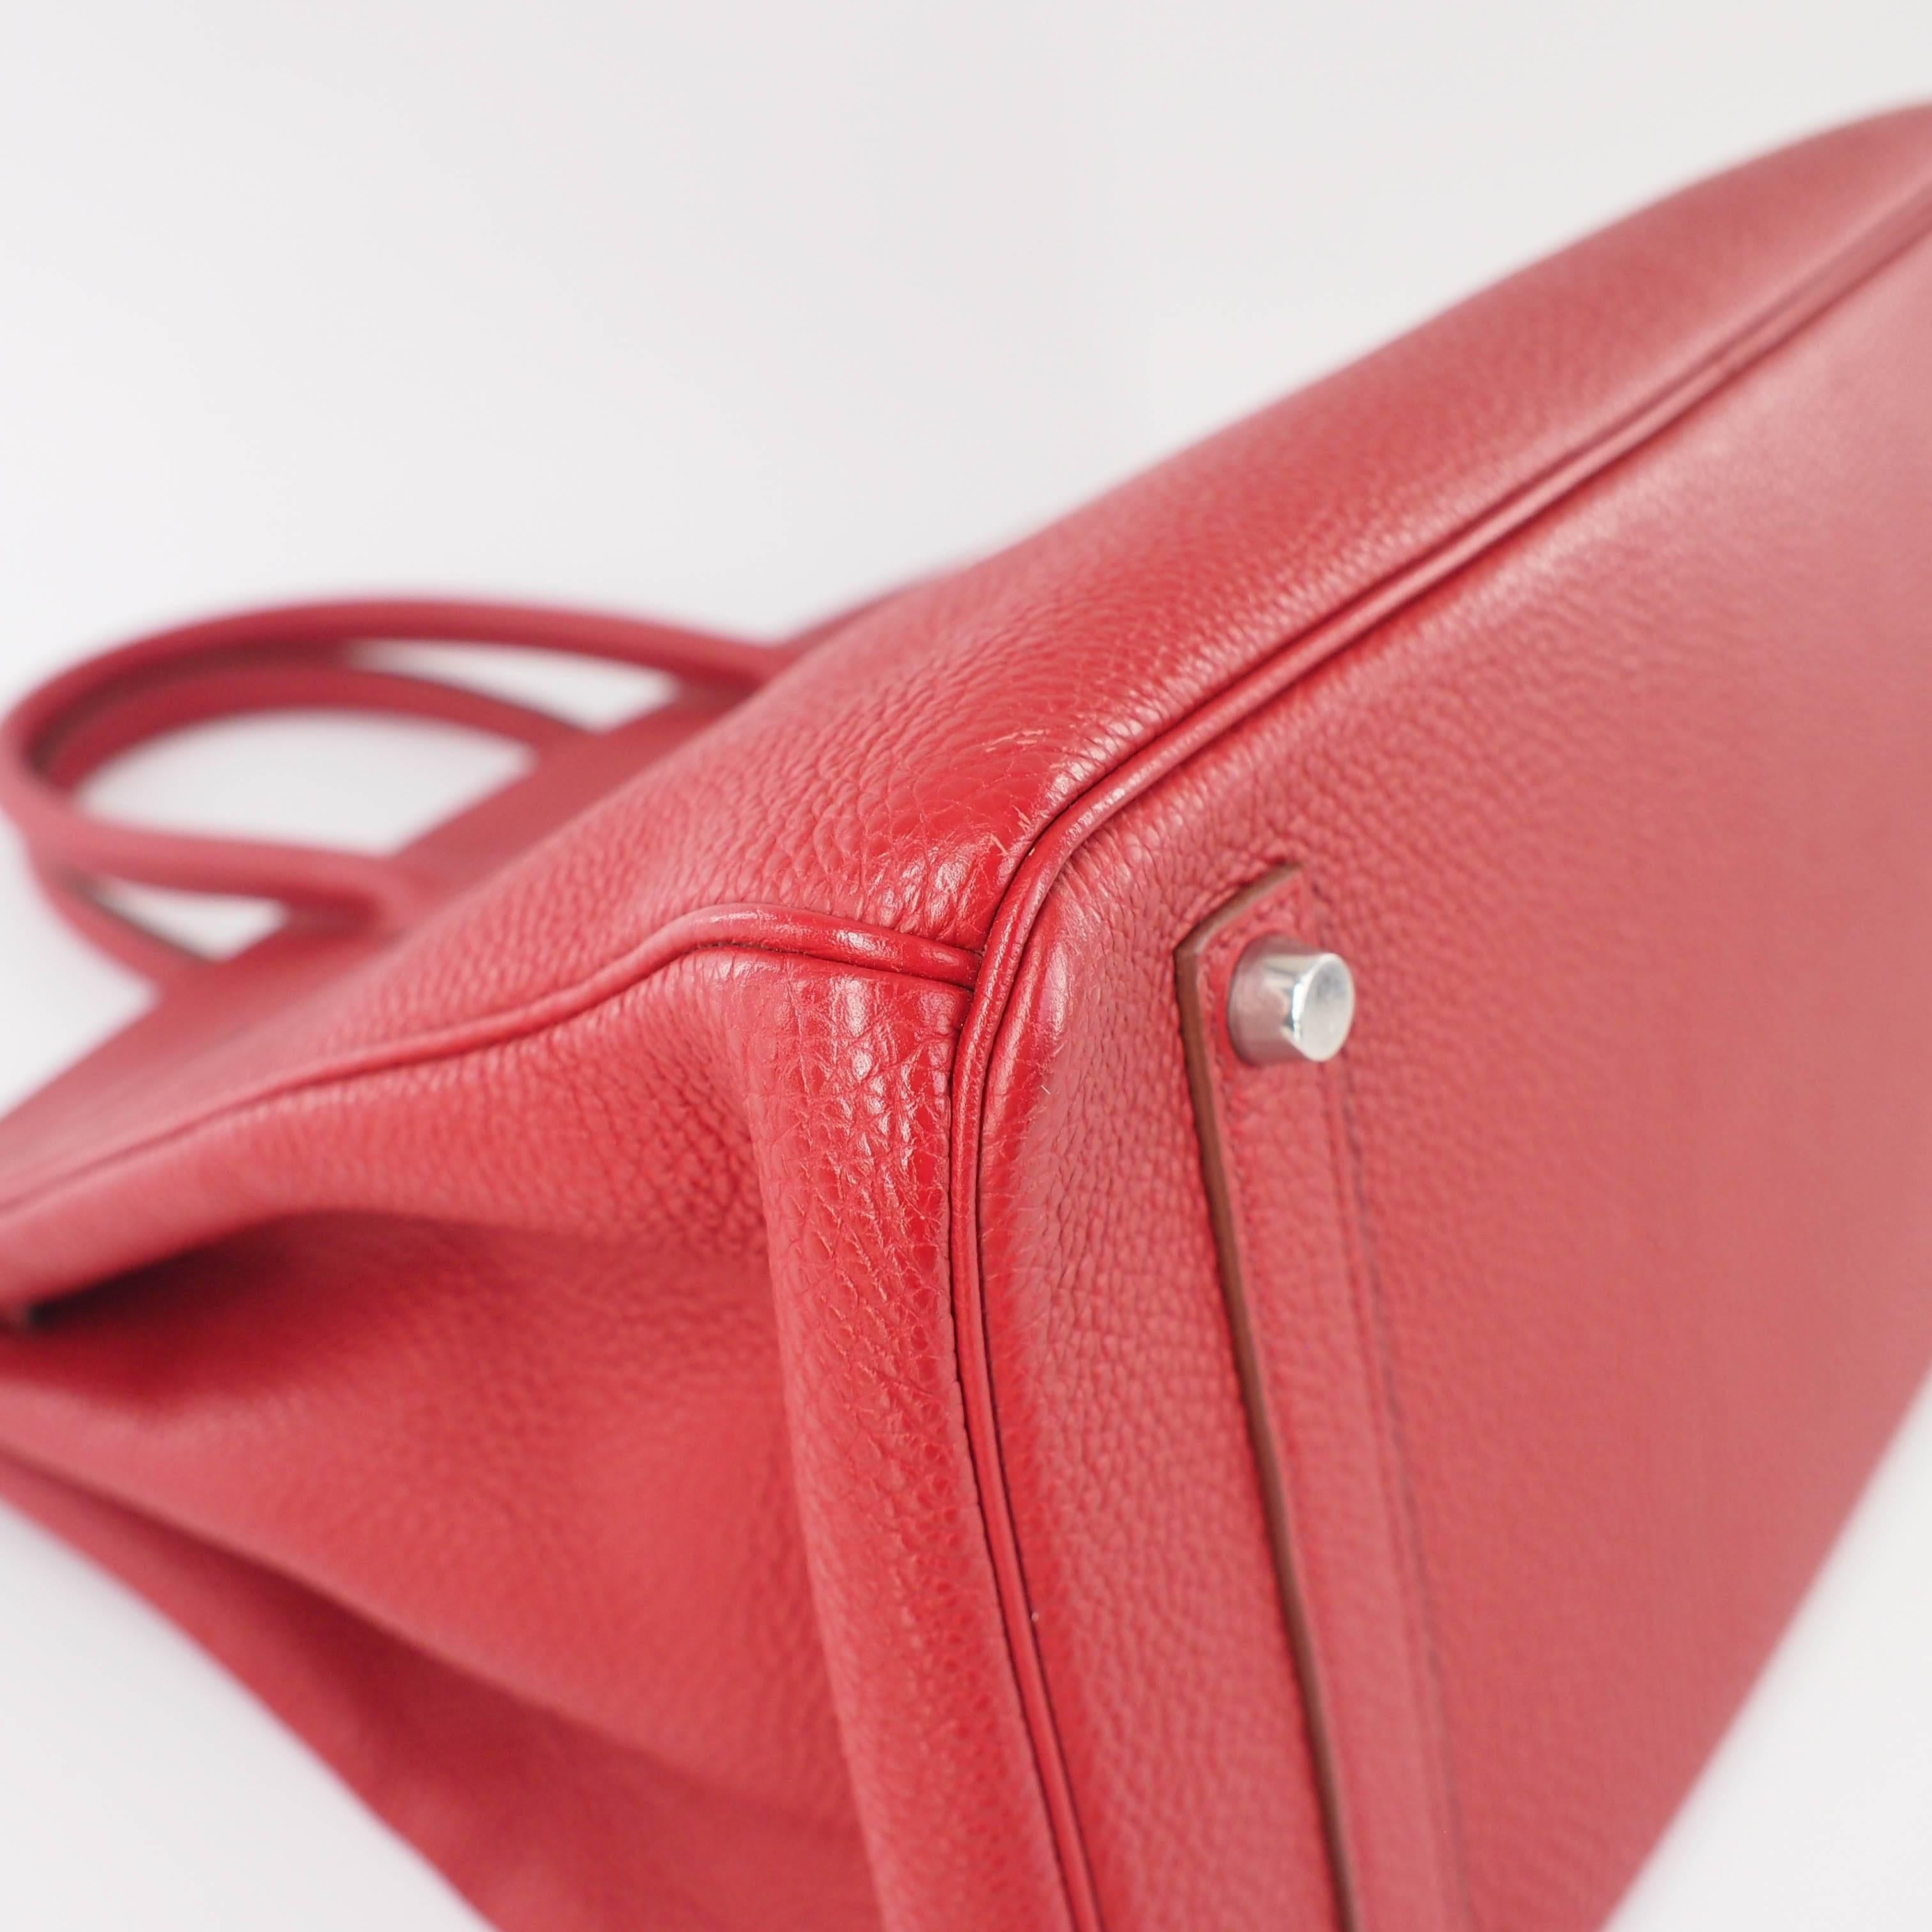 Hermes Birkin Handbag size 35 in Rouge Grenade With Palladium Hardware (PHW) 8